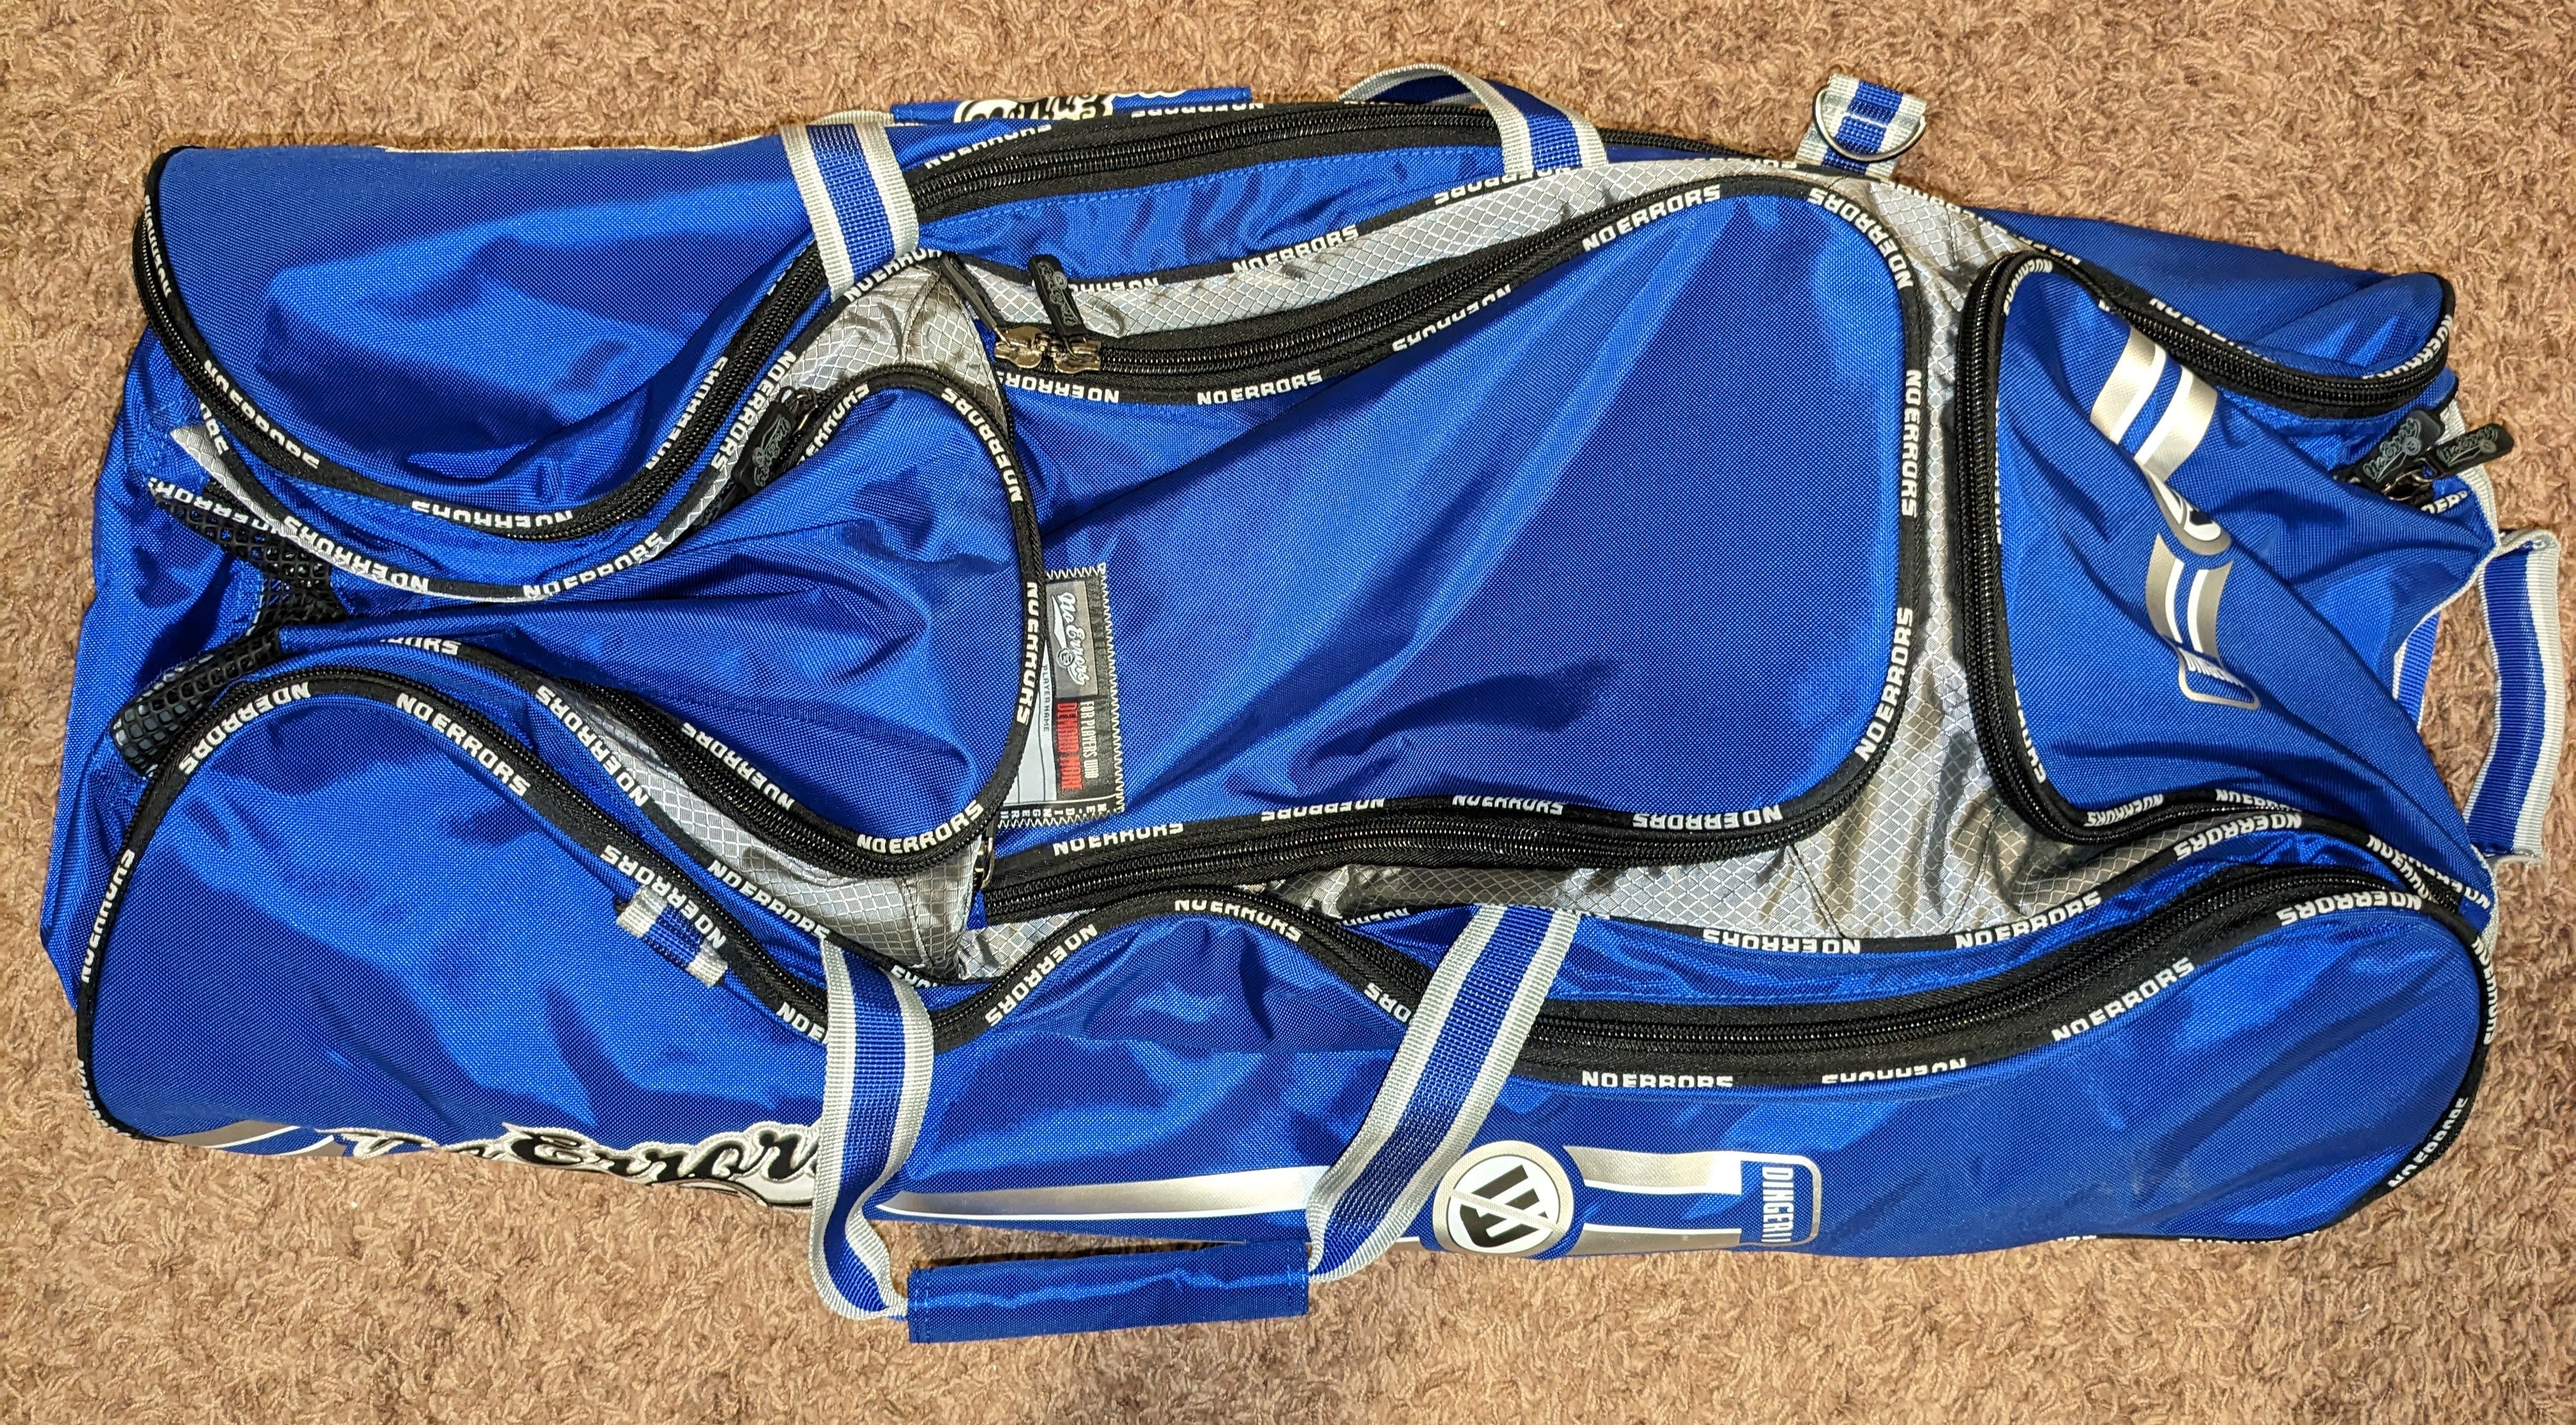 Used Louisville Slugger PLAYER WHEELED Baseball and Softball Equipment Bags  Baseball and Softball Equipment Bags